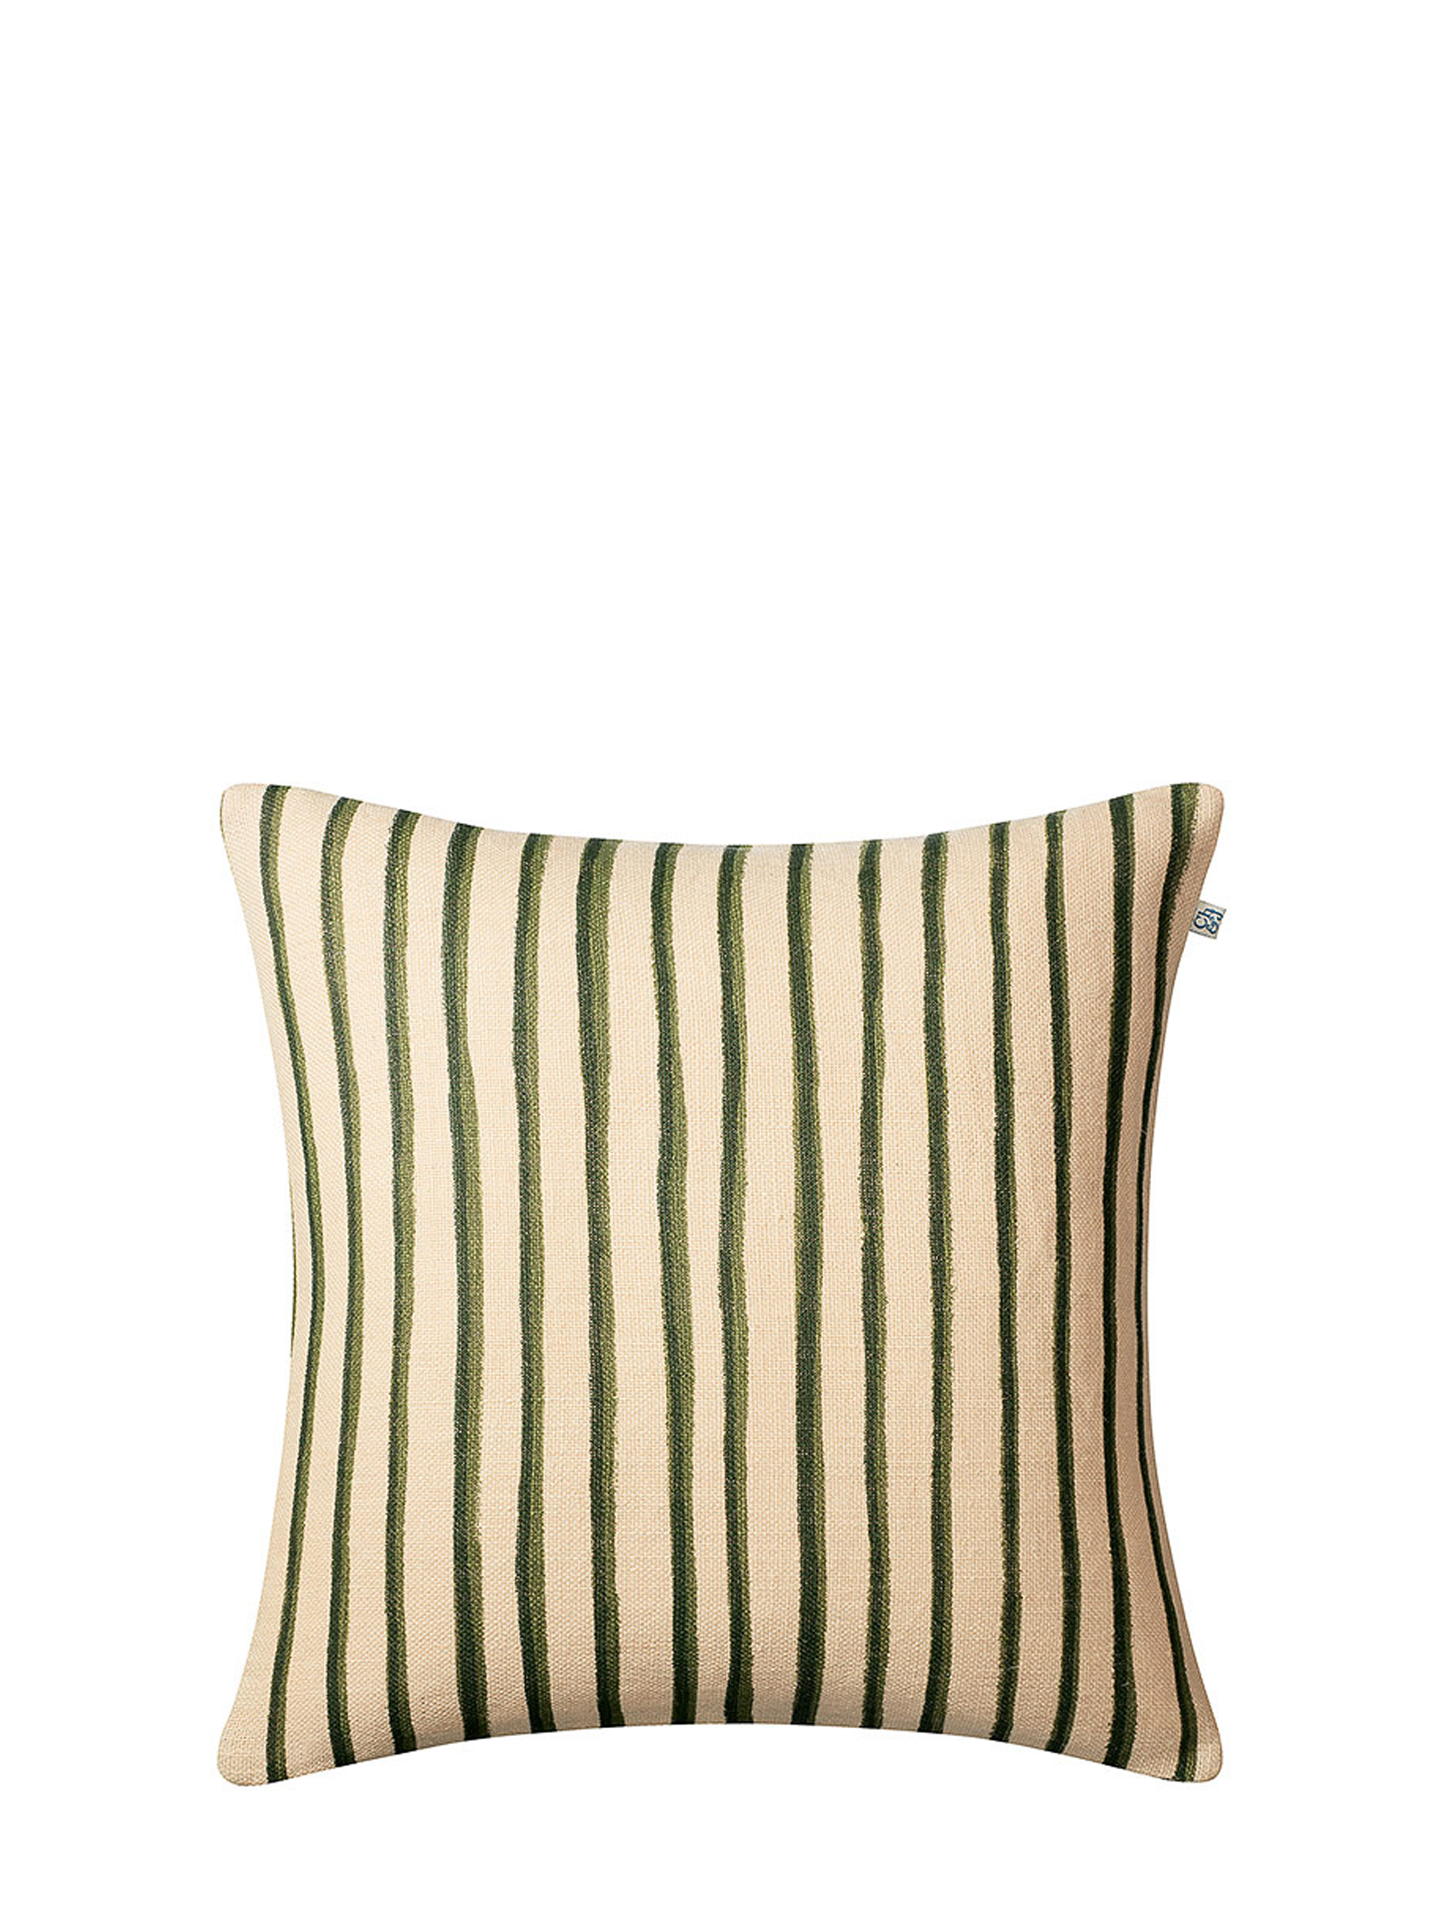 Jaipur Stripe Cushion Cover, Green